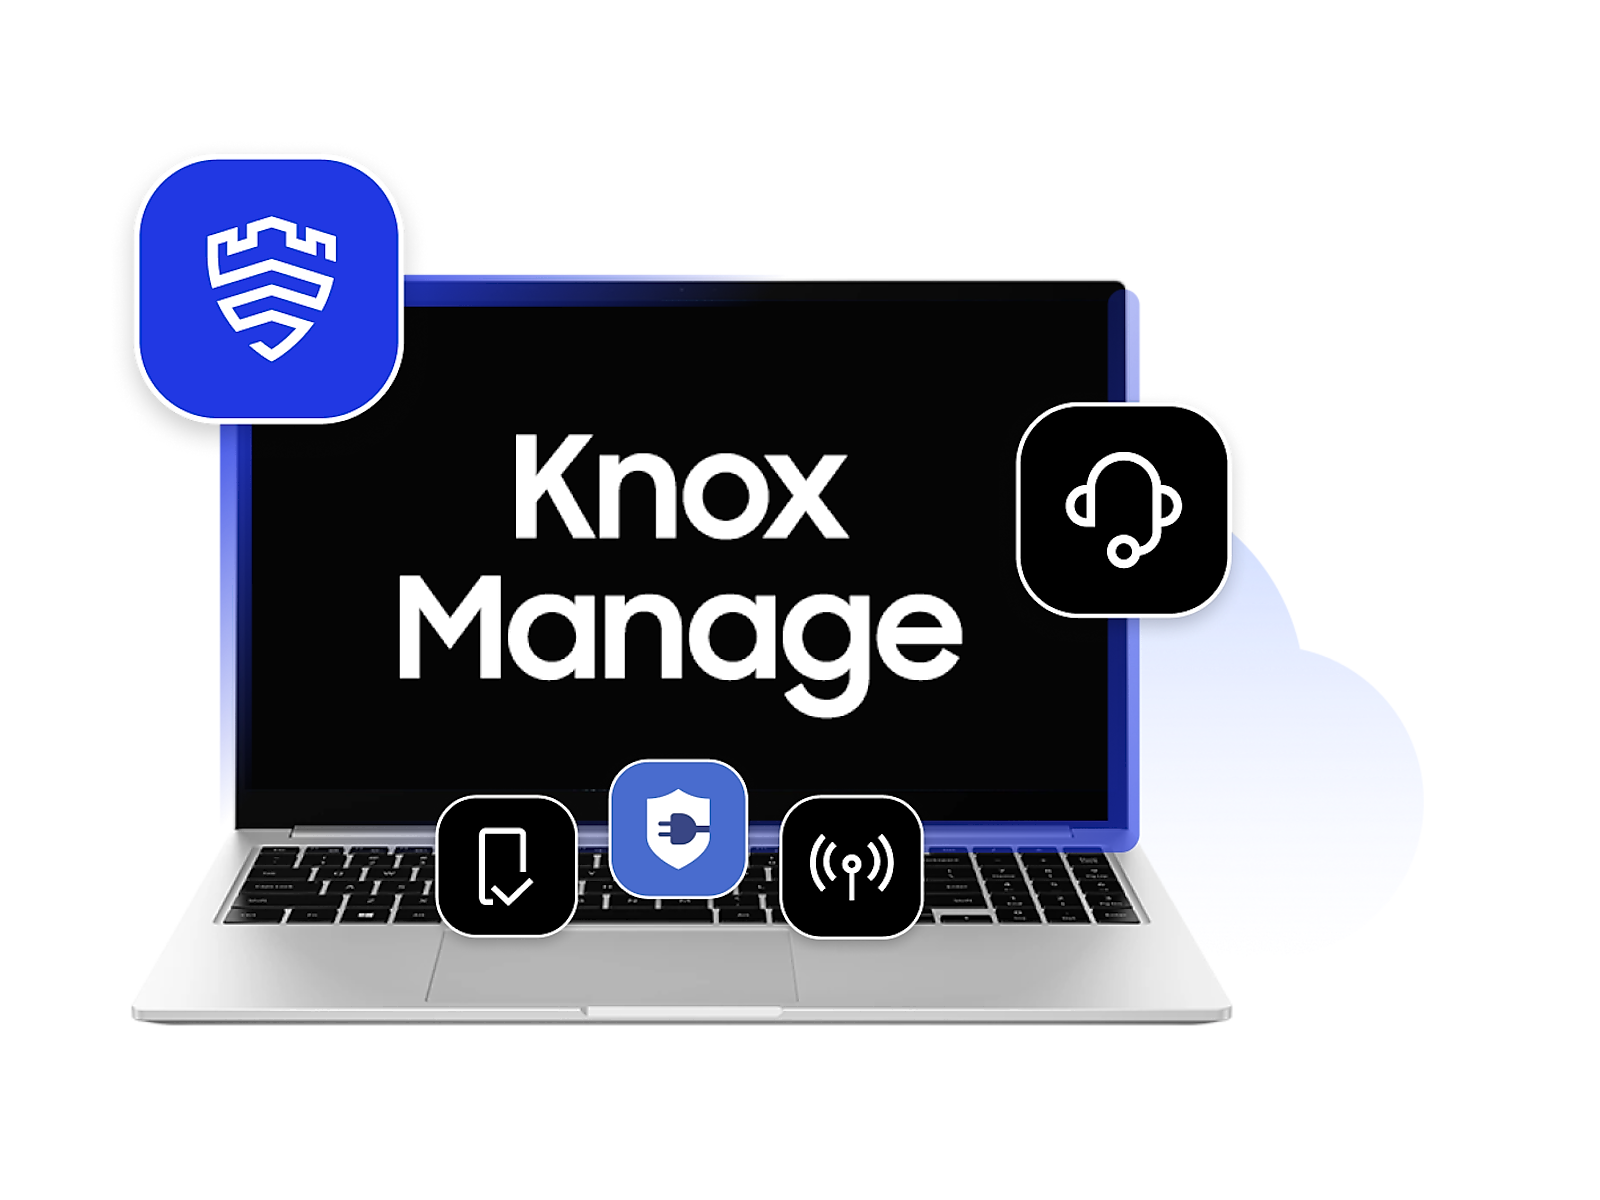 Samsung Knox Manage 1 Year License